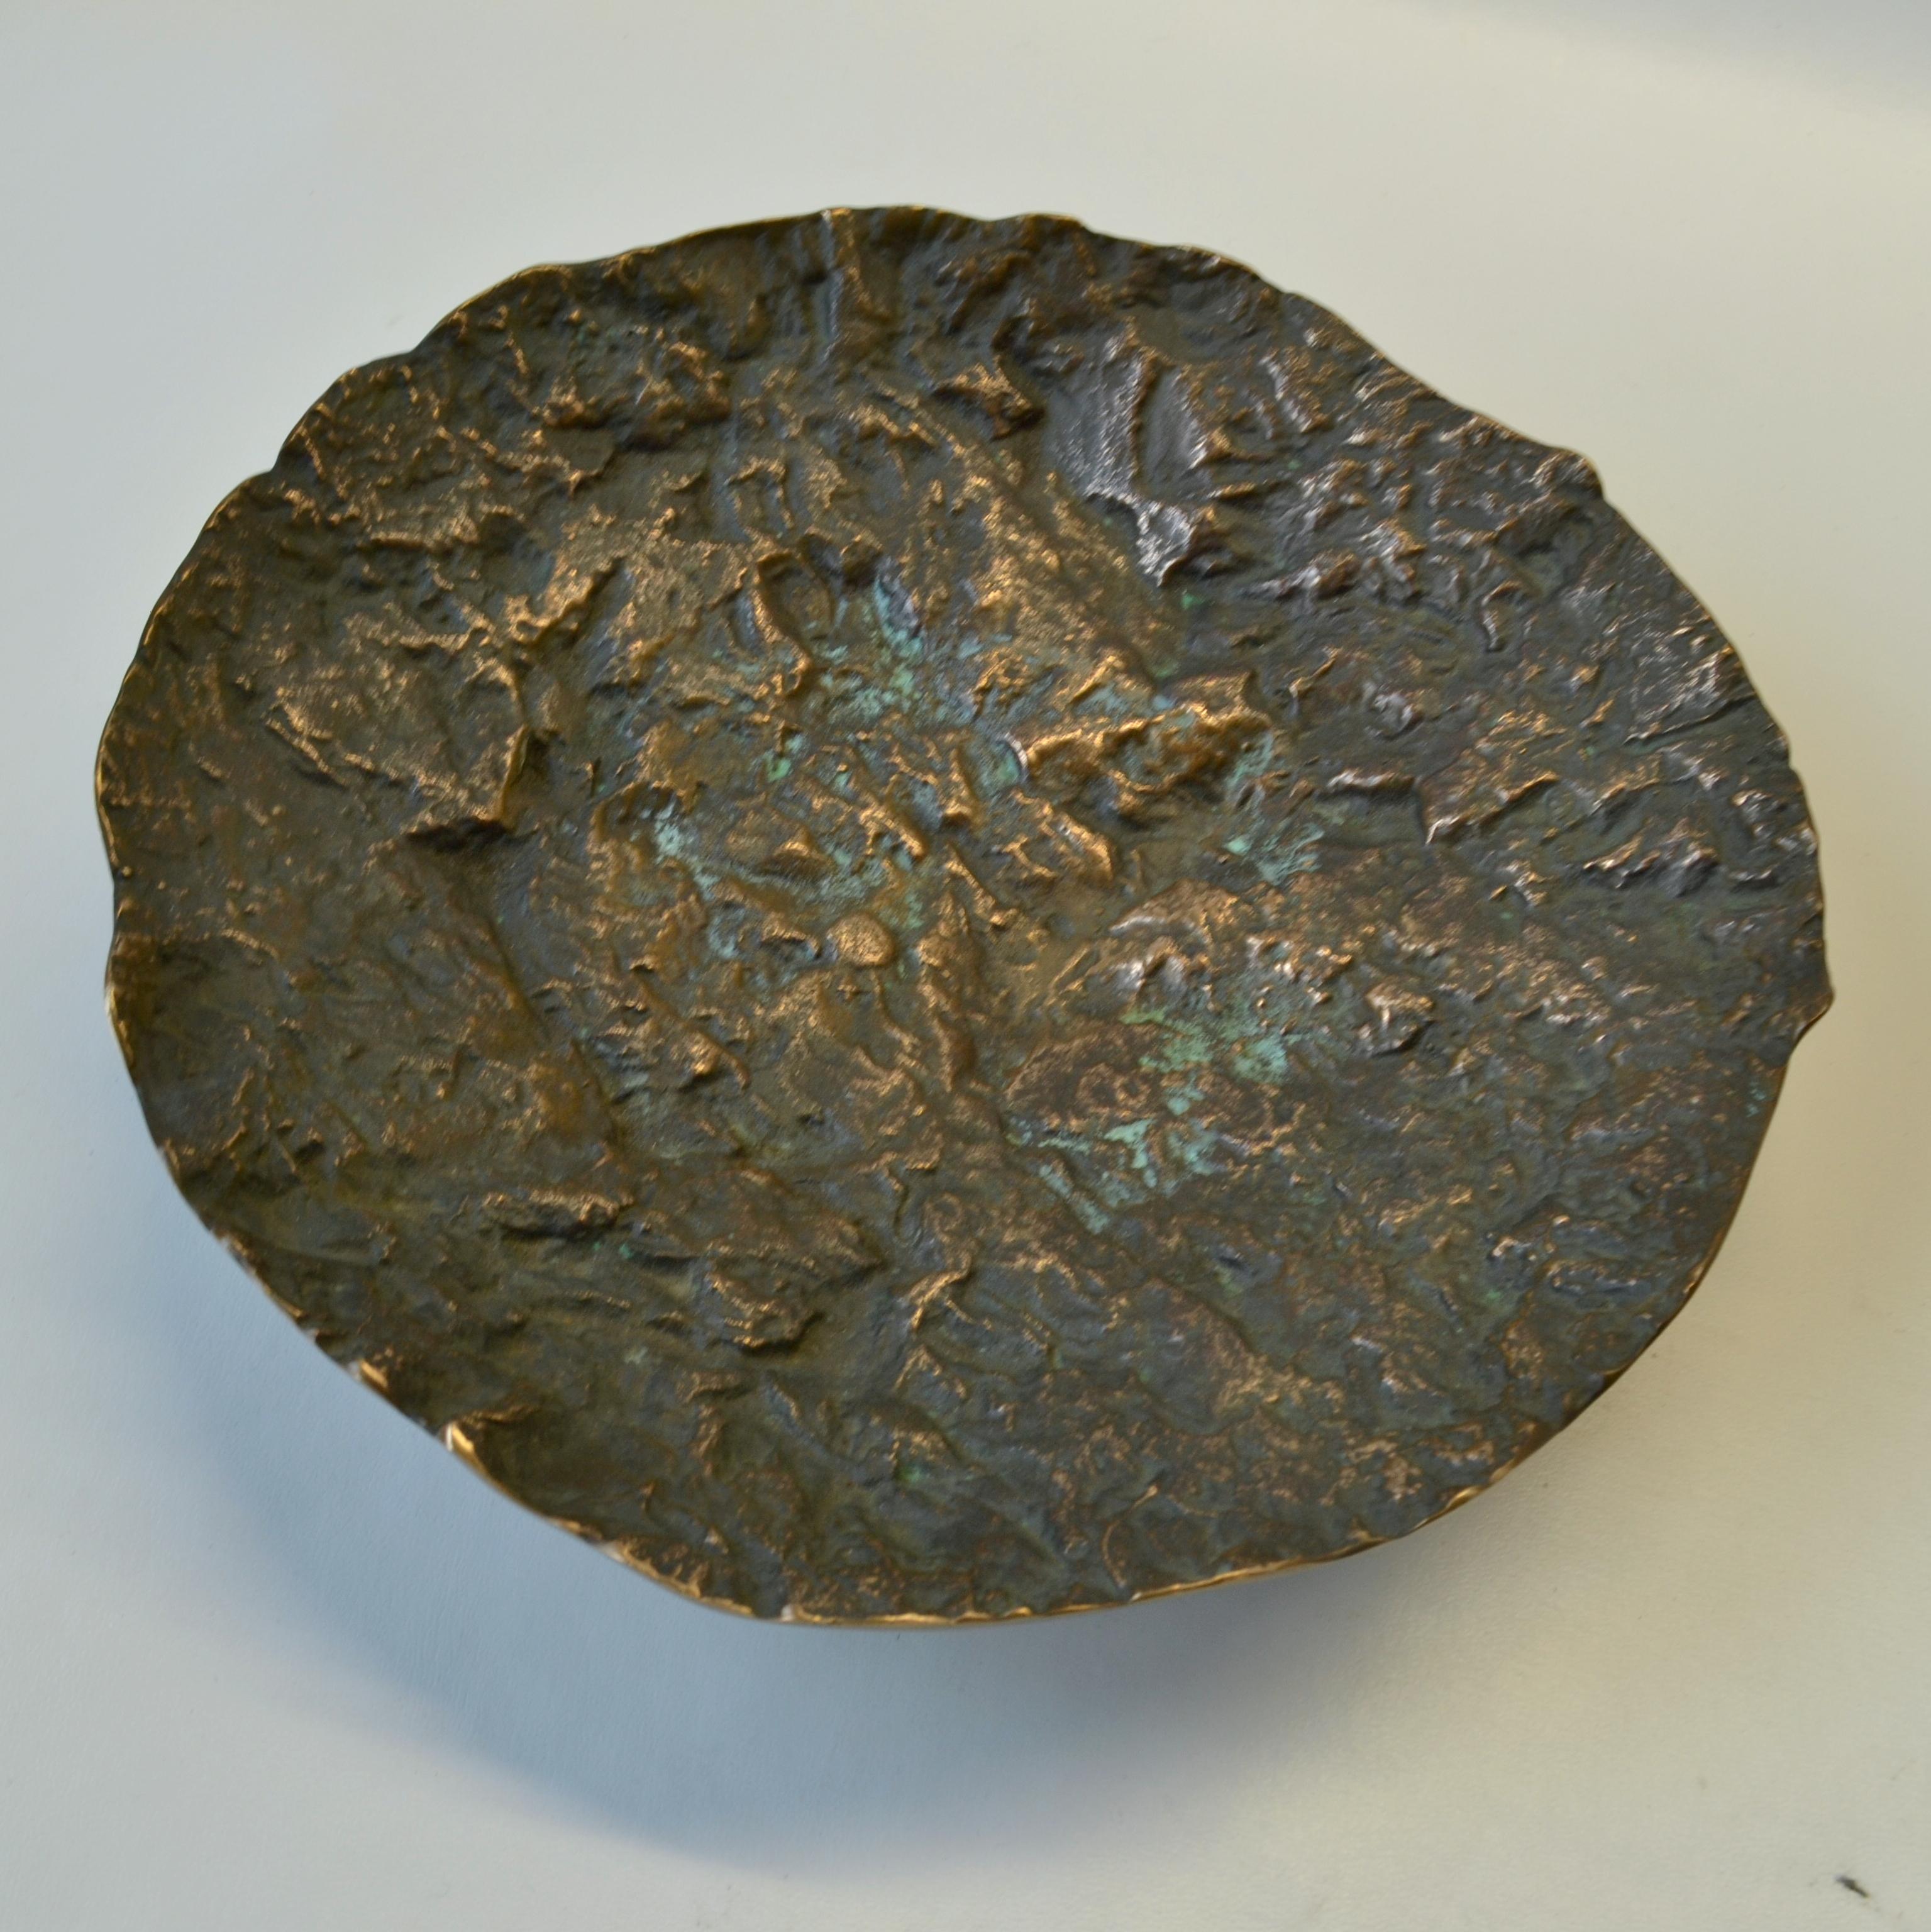 Textural bronze cast bowl on three legs with nice oxidized patina, signed Kaj Blomqvist, Finland.